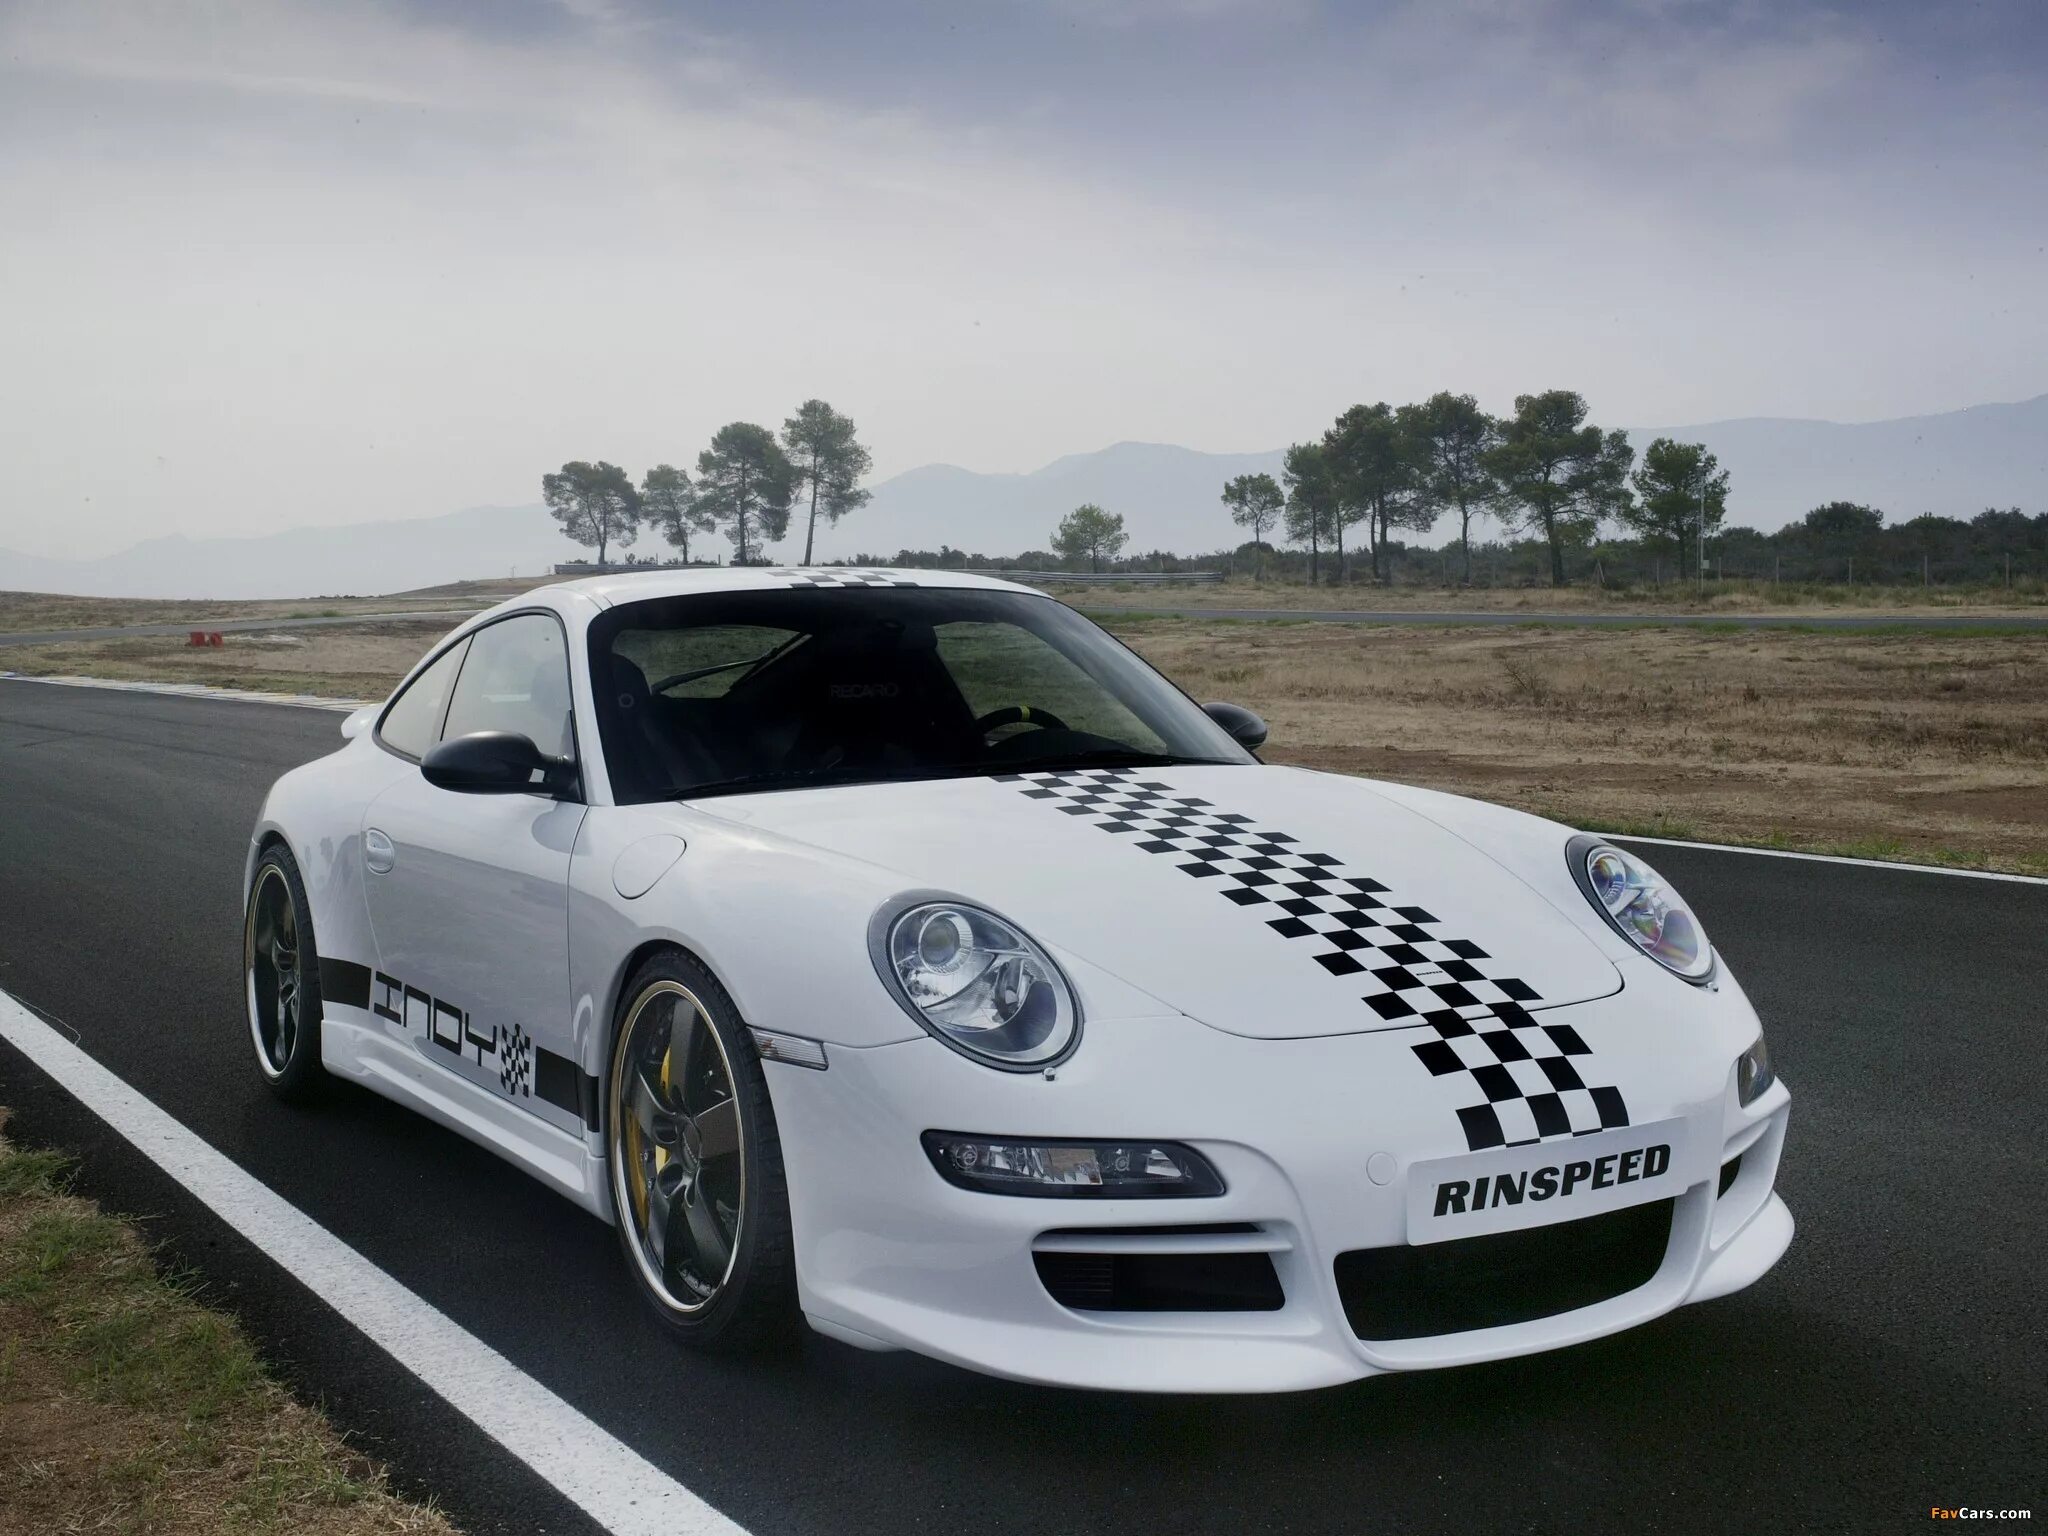 Porsche 911 Rinspeed. Rinspeed Porsche 997 Indy. Porsche 911 Mansory. Mansory Porsche 997. Своб машина